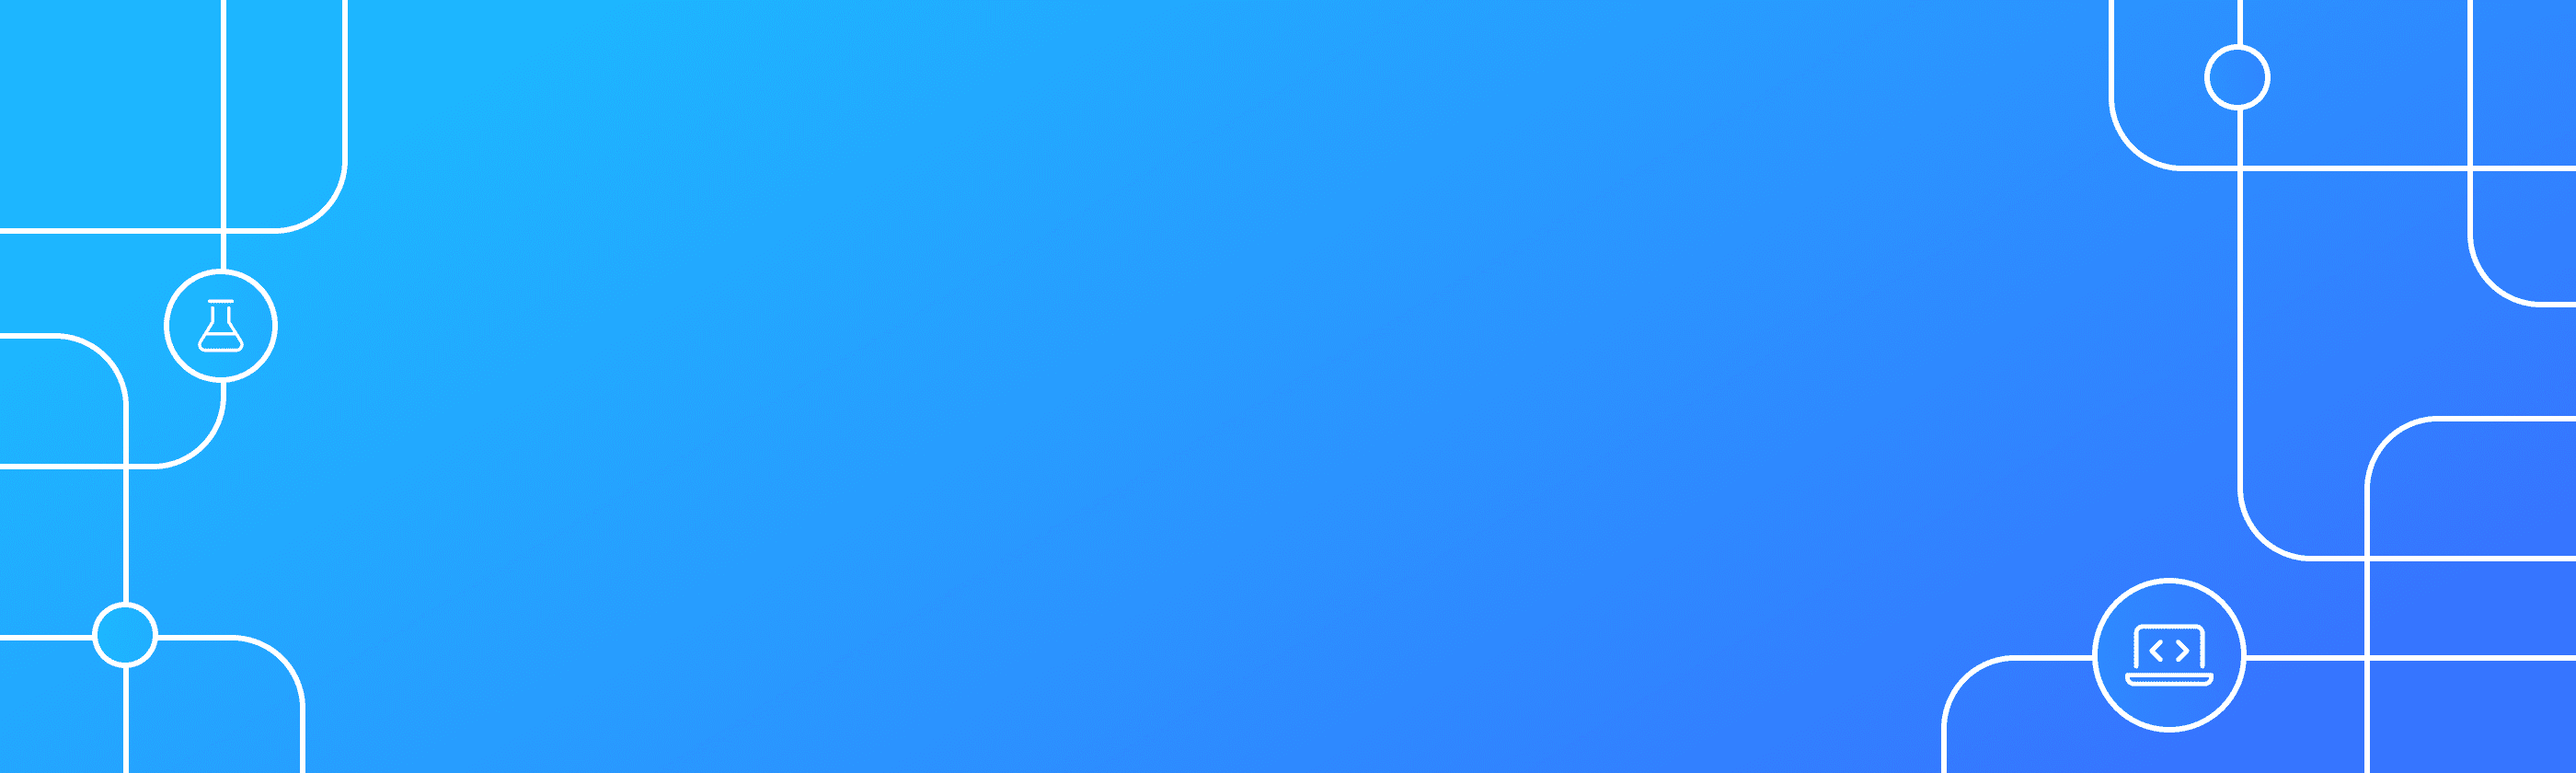 banner blue lines background